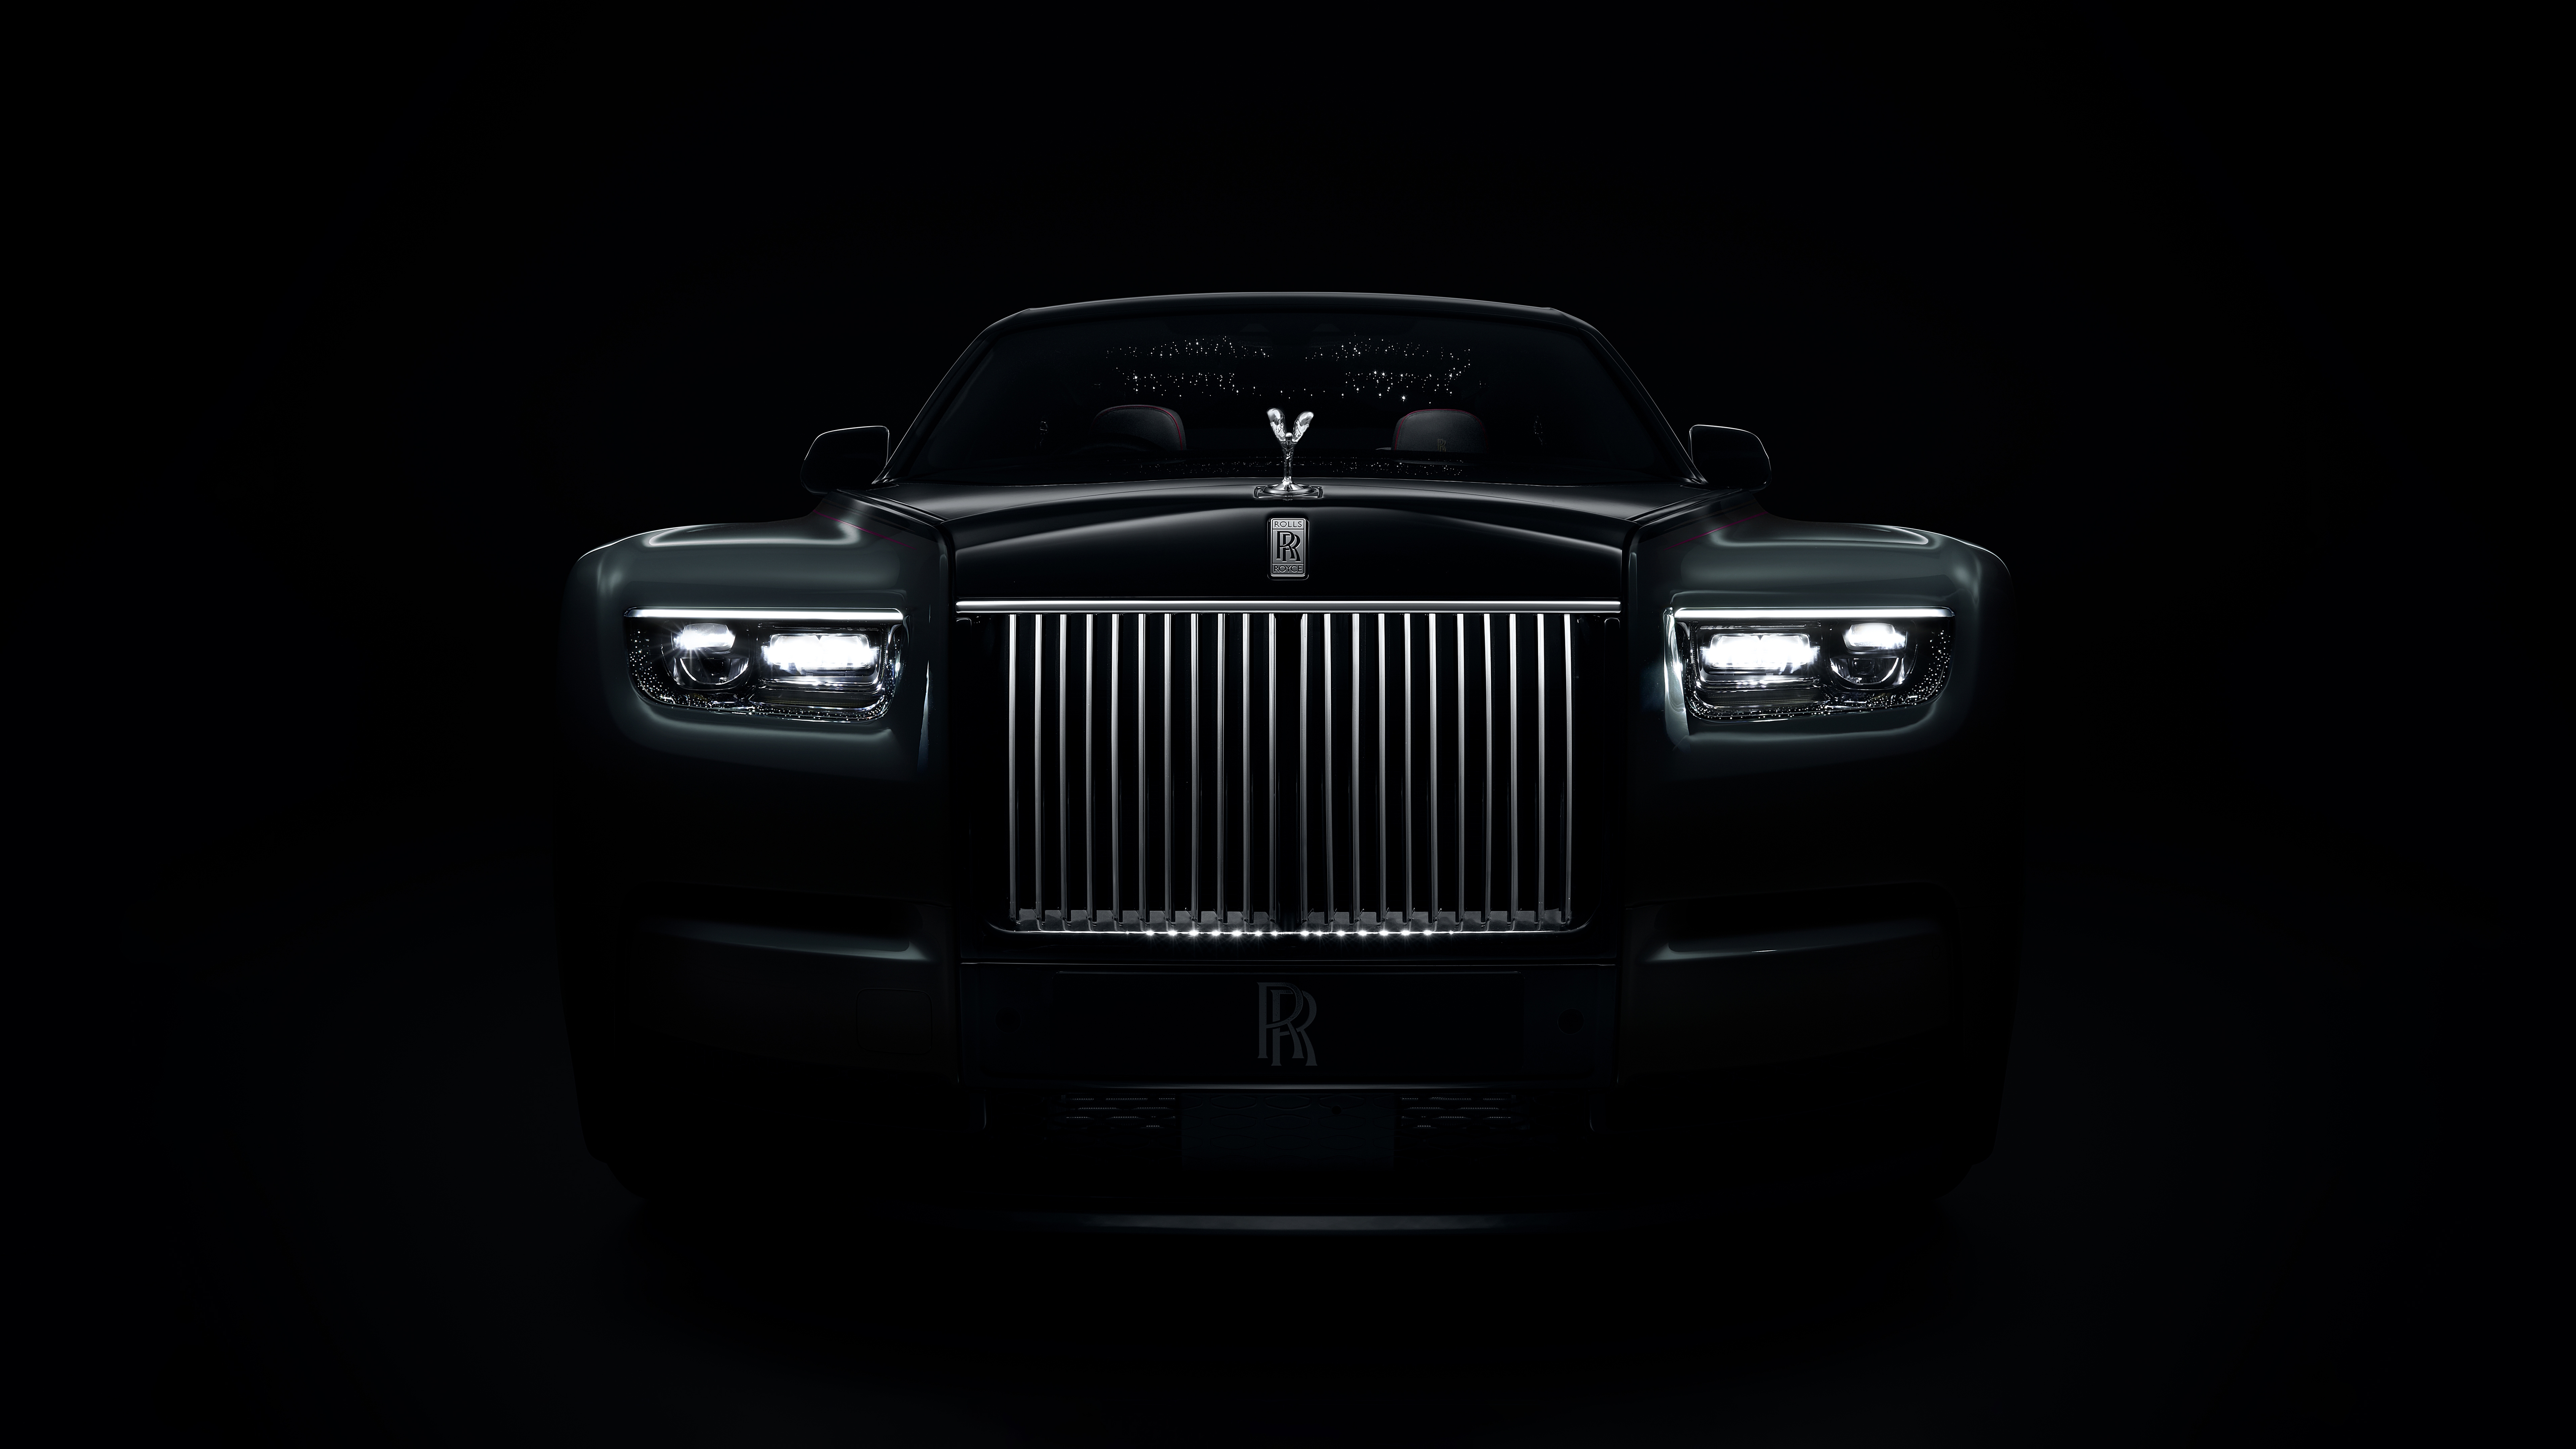 HD wallpaper, Black Cars, Rolls Royce Phantom Series Ii, 8K, Black Background, 5K, 2022